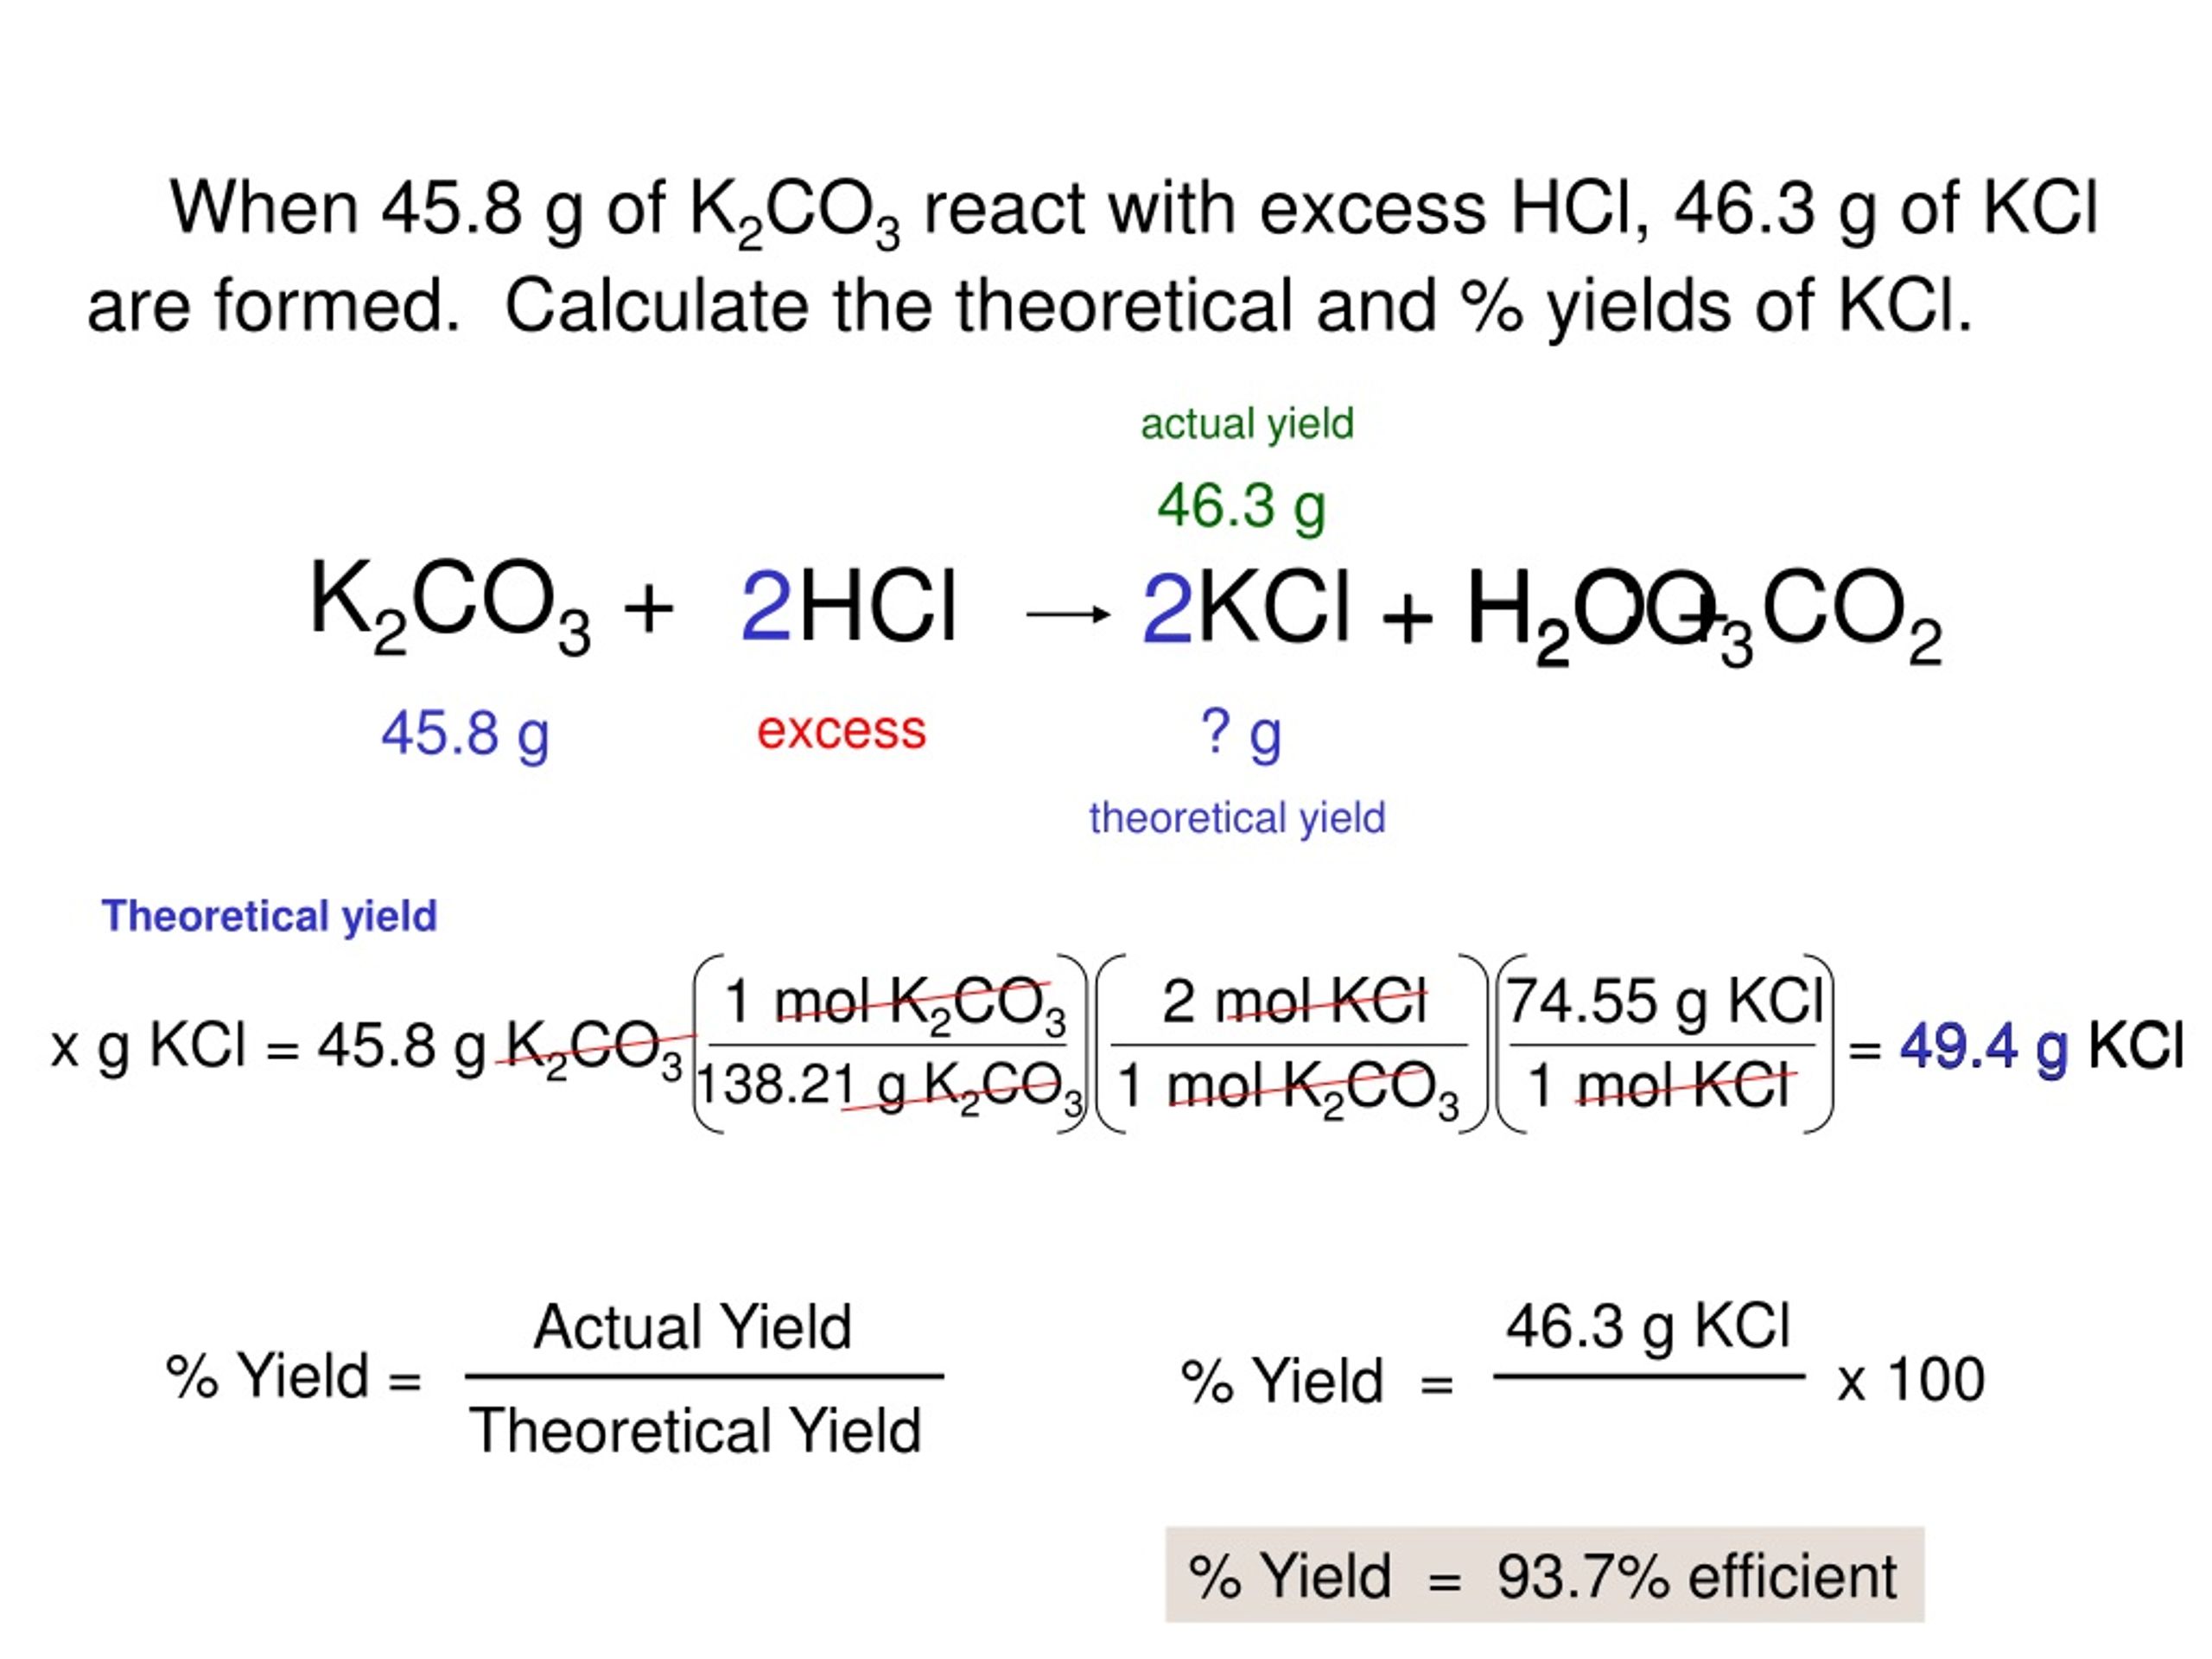 P k2co3. K2co3 KCL. Co2 k2co3 реакция. K2co3 + 2hcl = 2kcl + h2o + co2. K+co2.